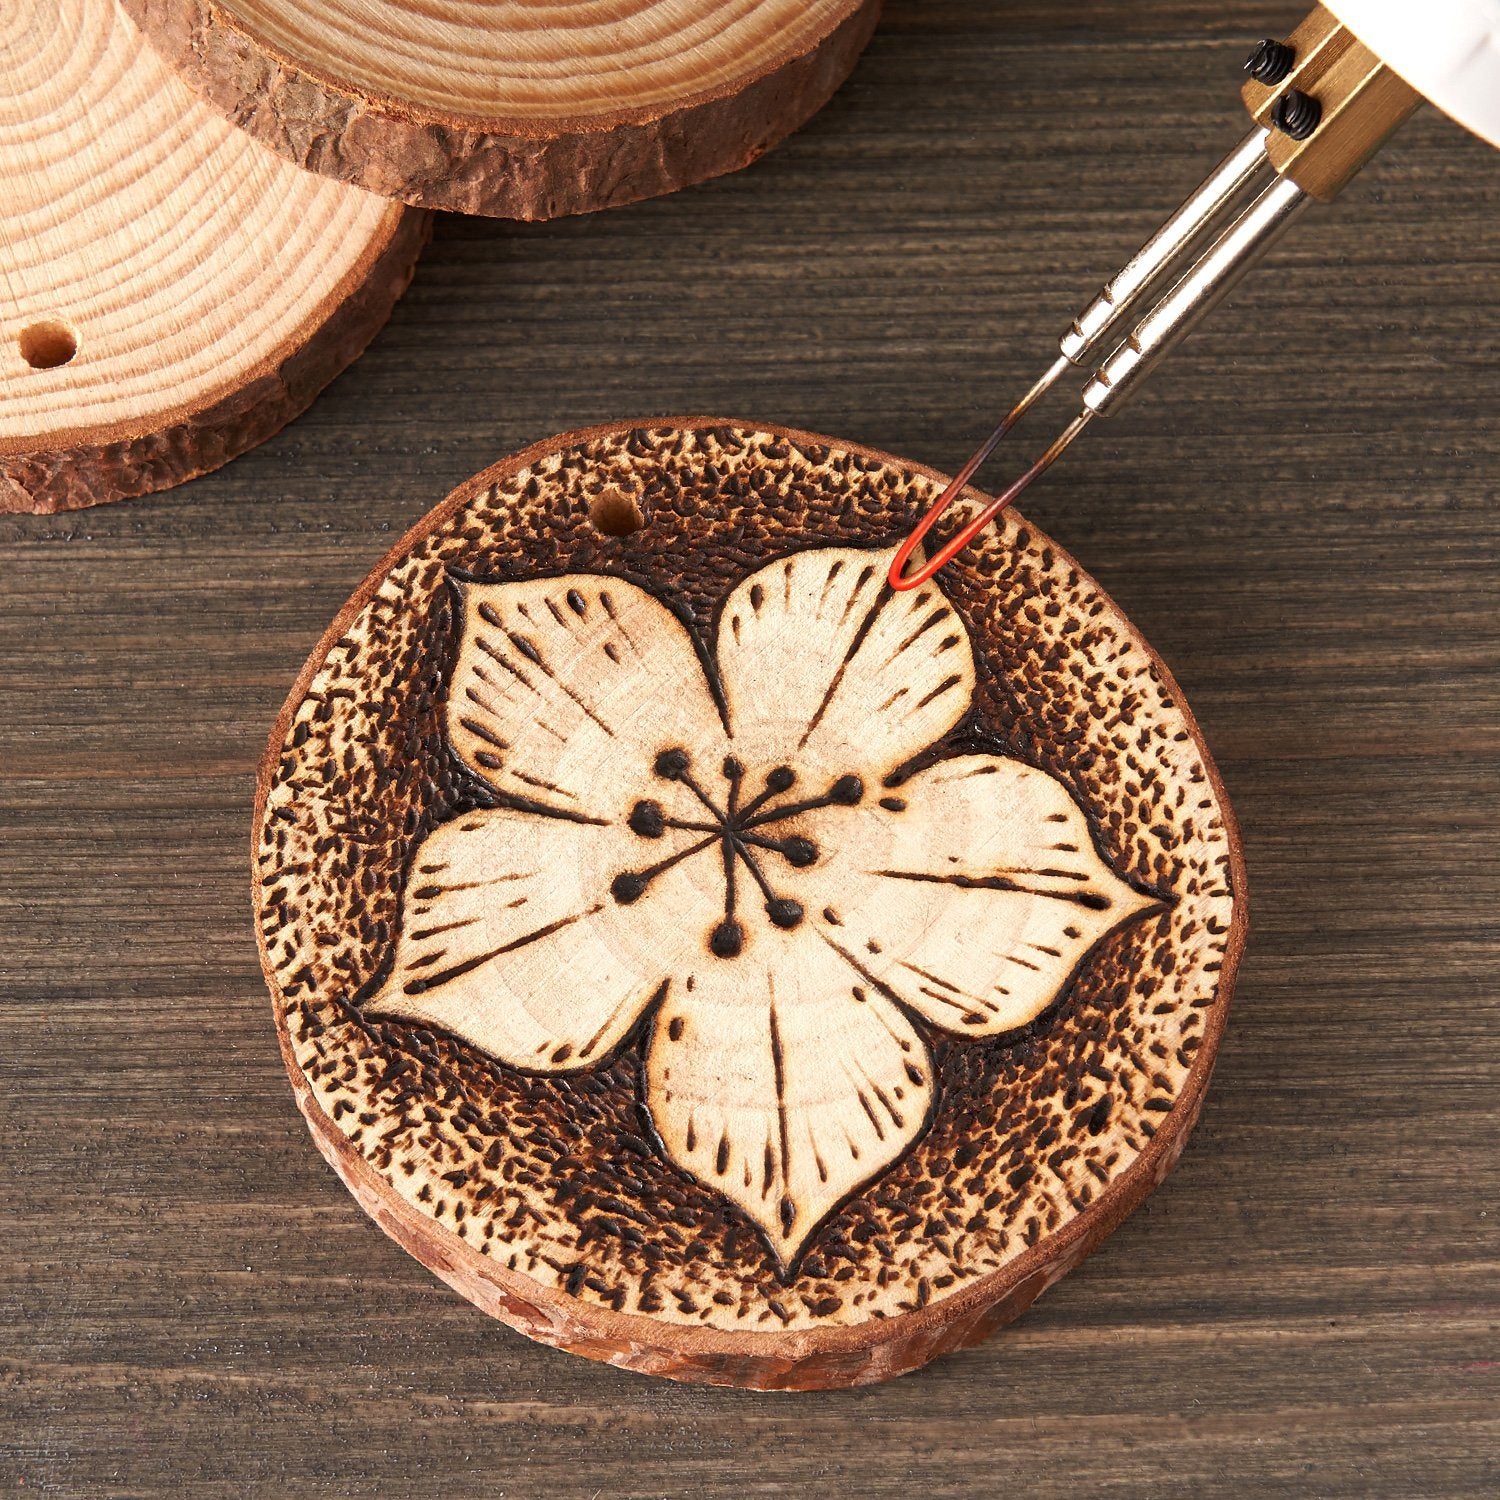 Creative Wood Slice Projects  Wood diy, Wood slices, Wood burning crafts